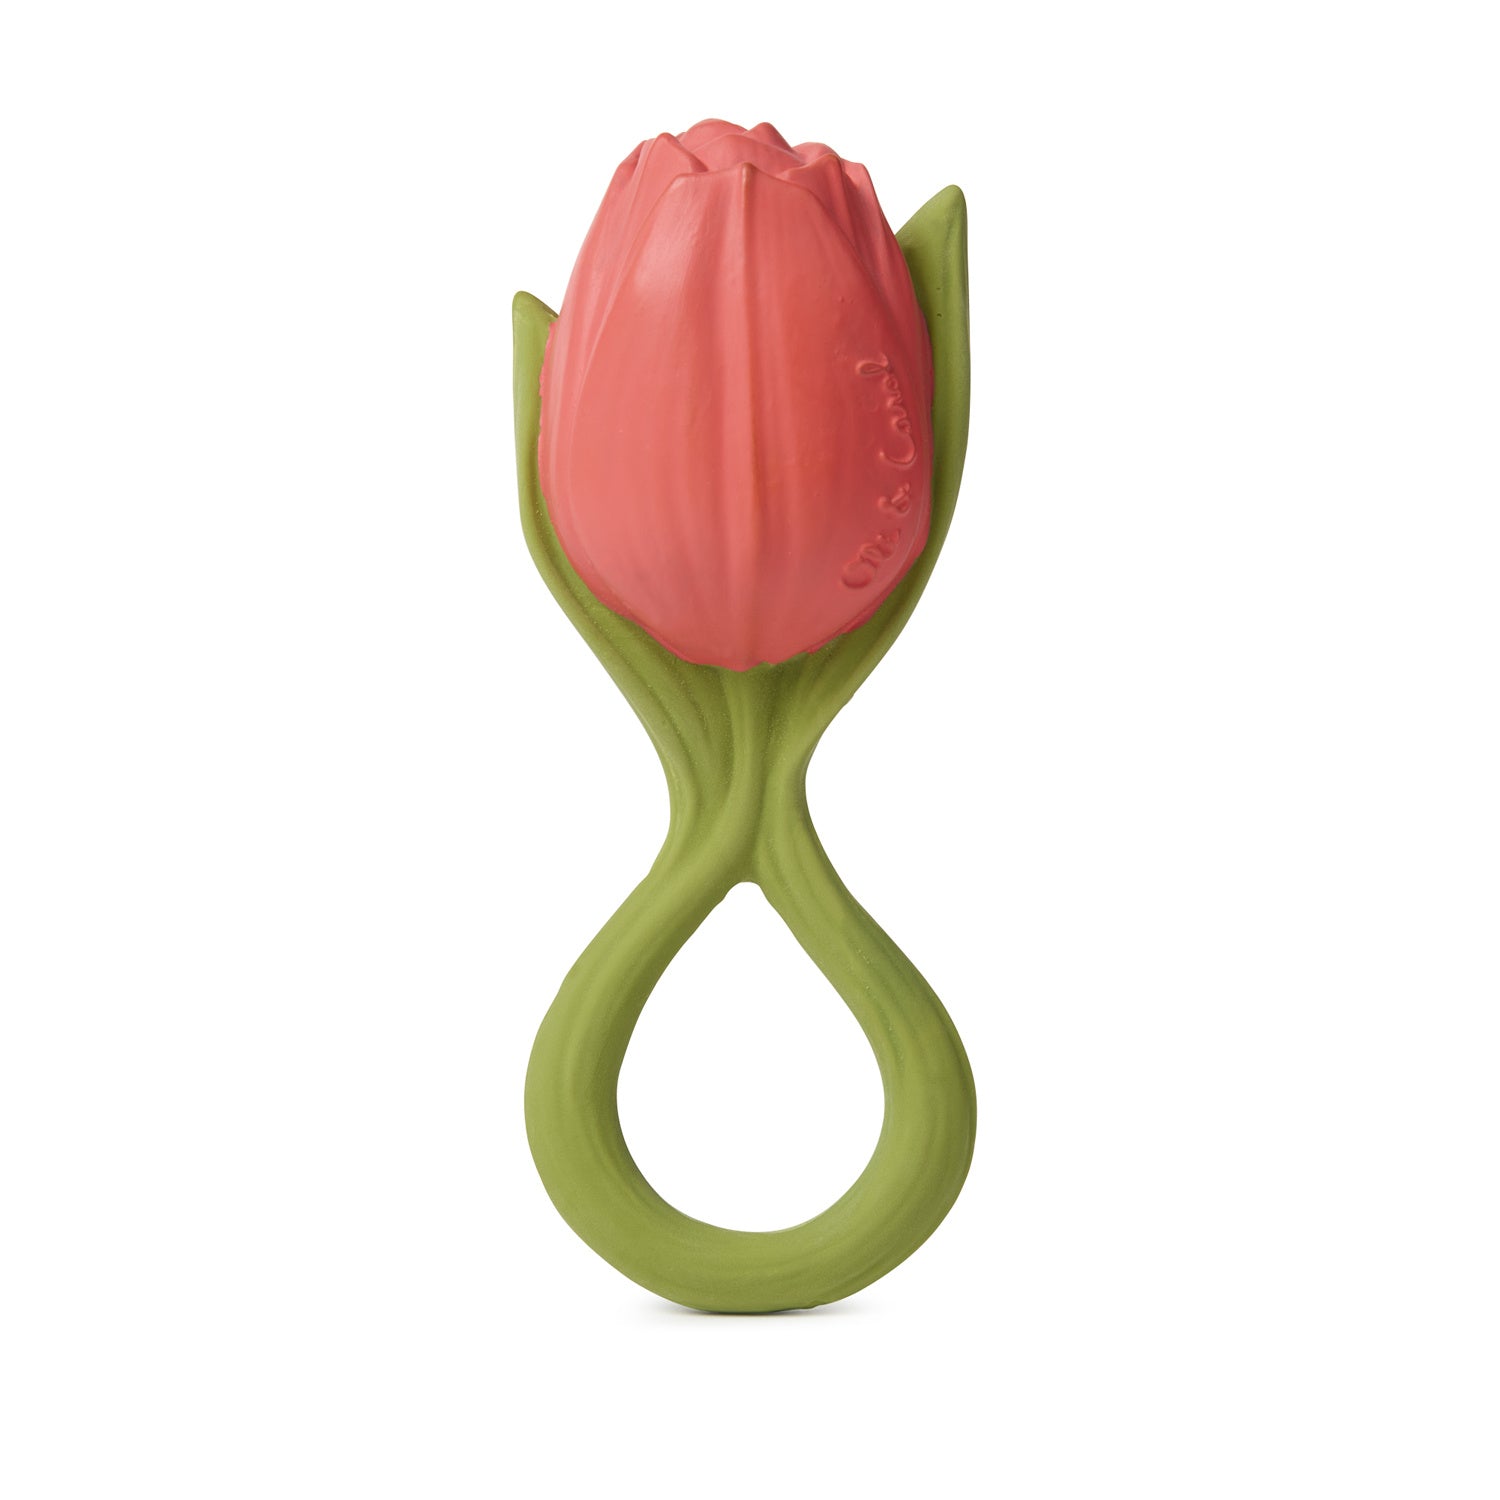 oli en carol, tulp, theo the tulip, bijtspeeltje